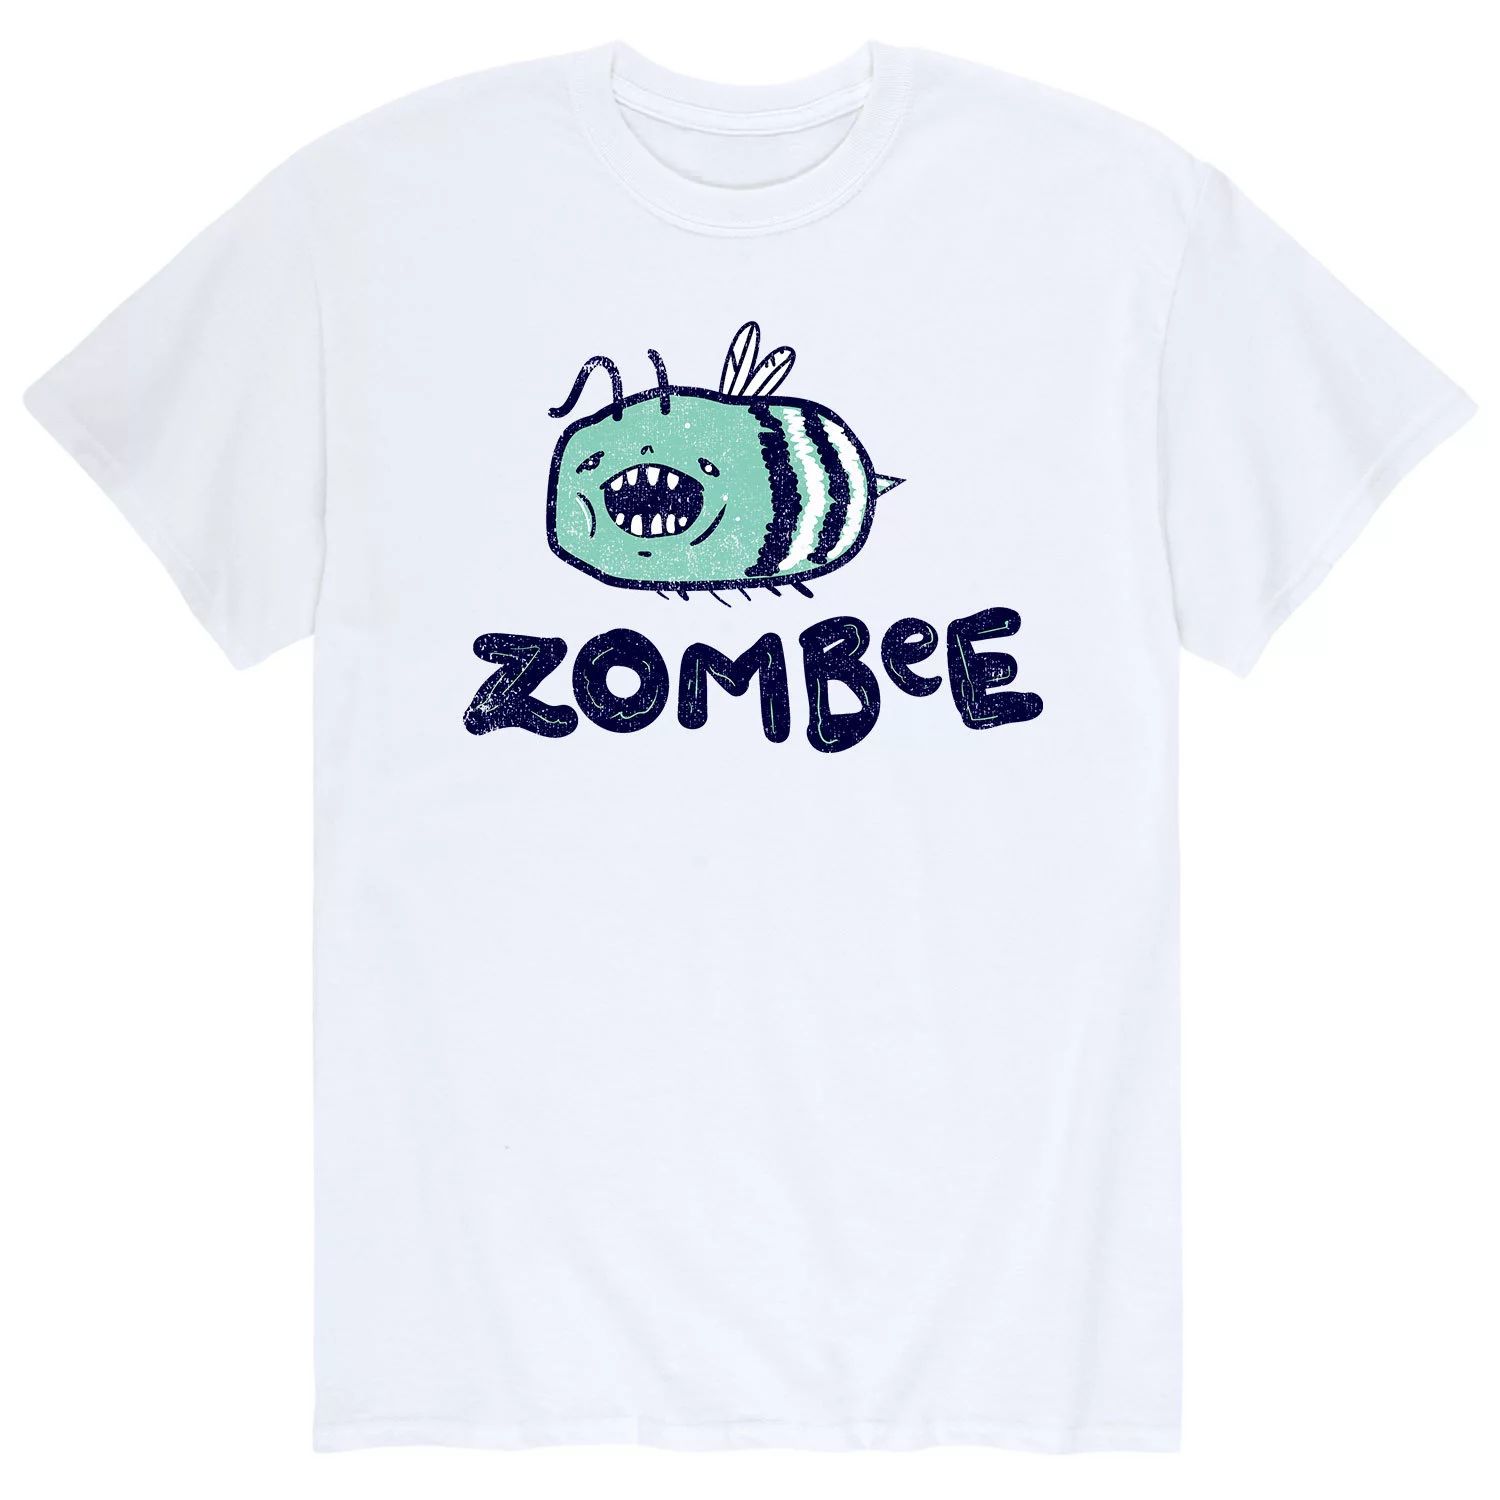 Мужская футболка с зомби Licensed Character мужская футболка кот зомби s синий